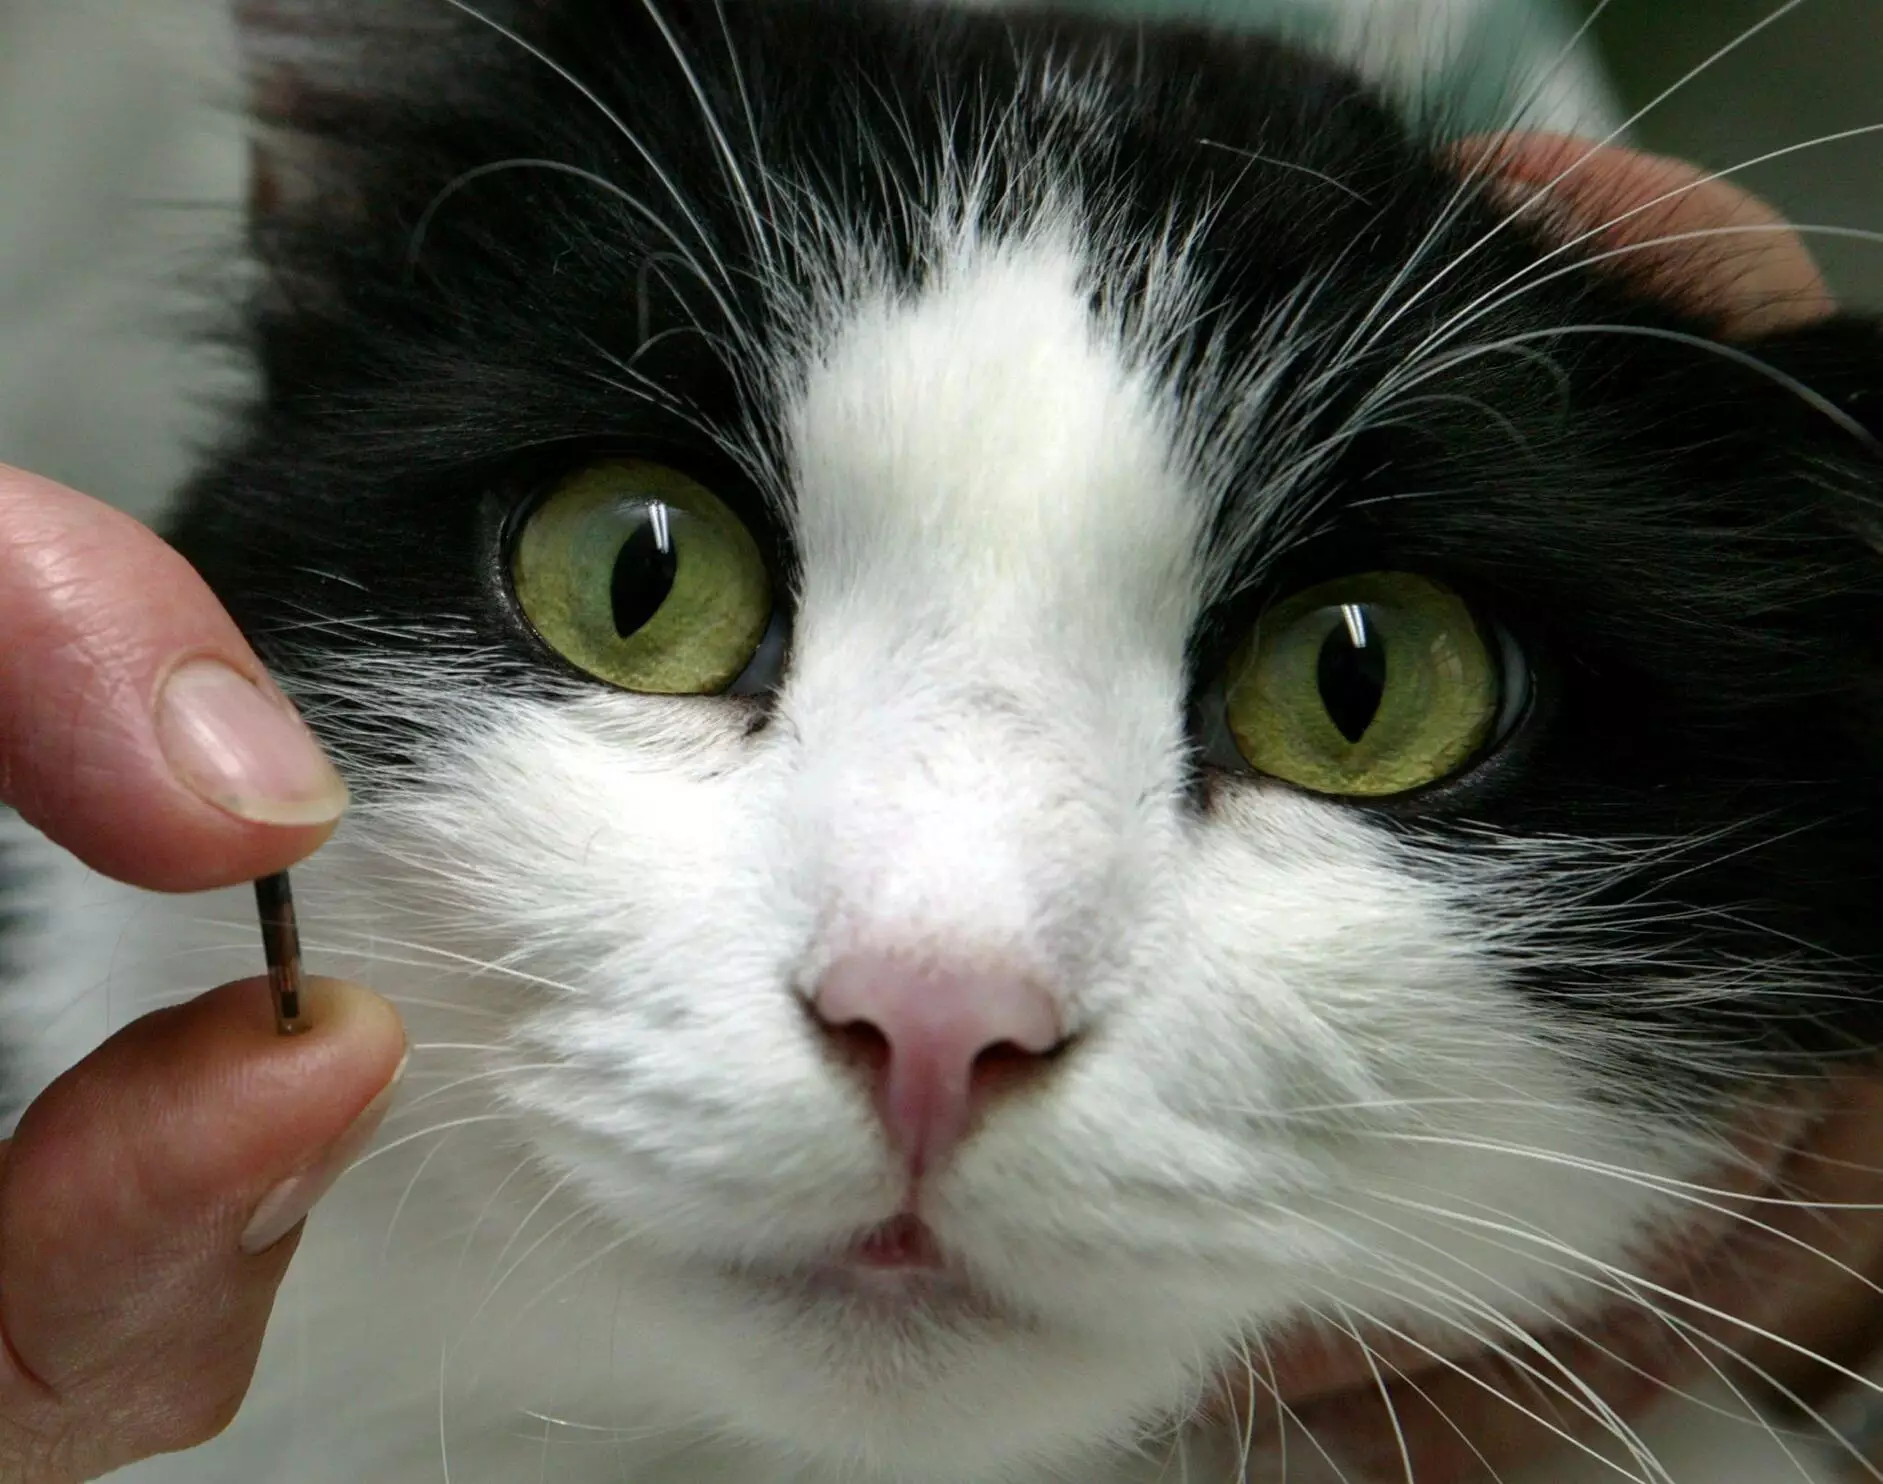 An adorable cat posing alongside a teeny microchip.